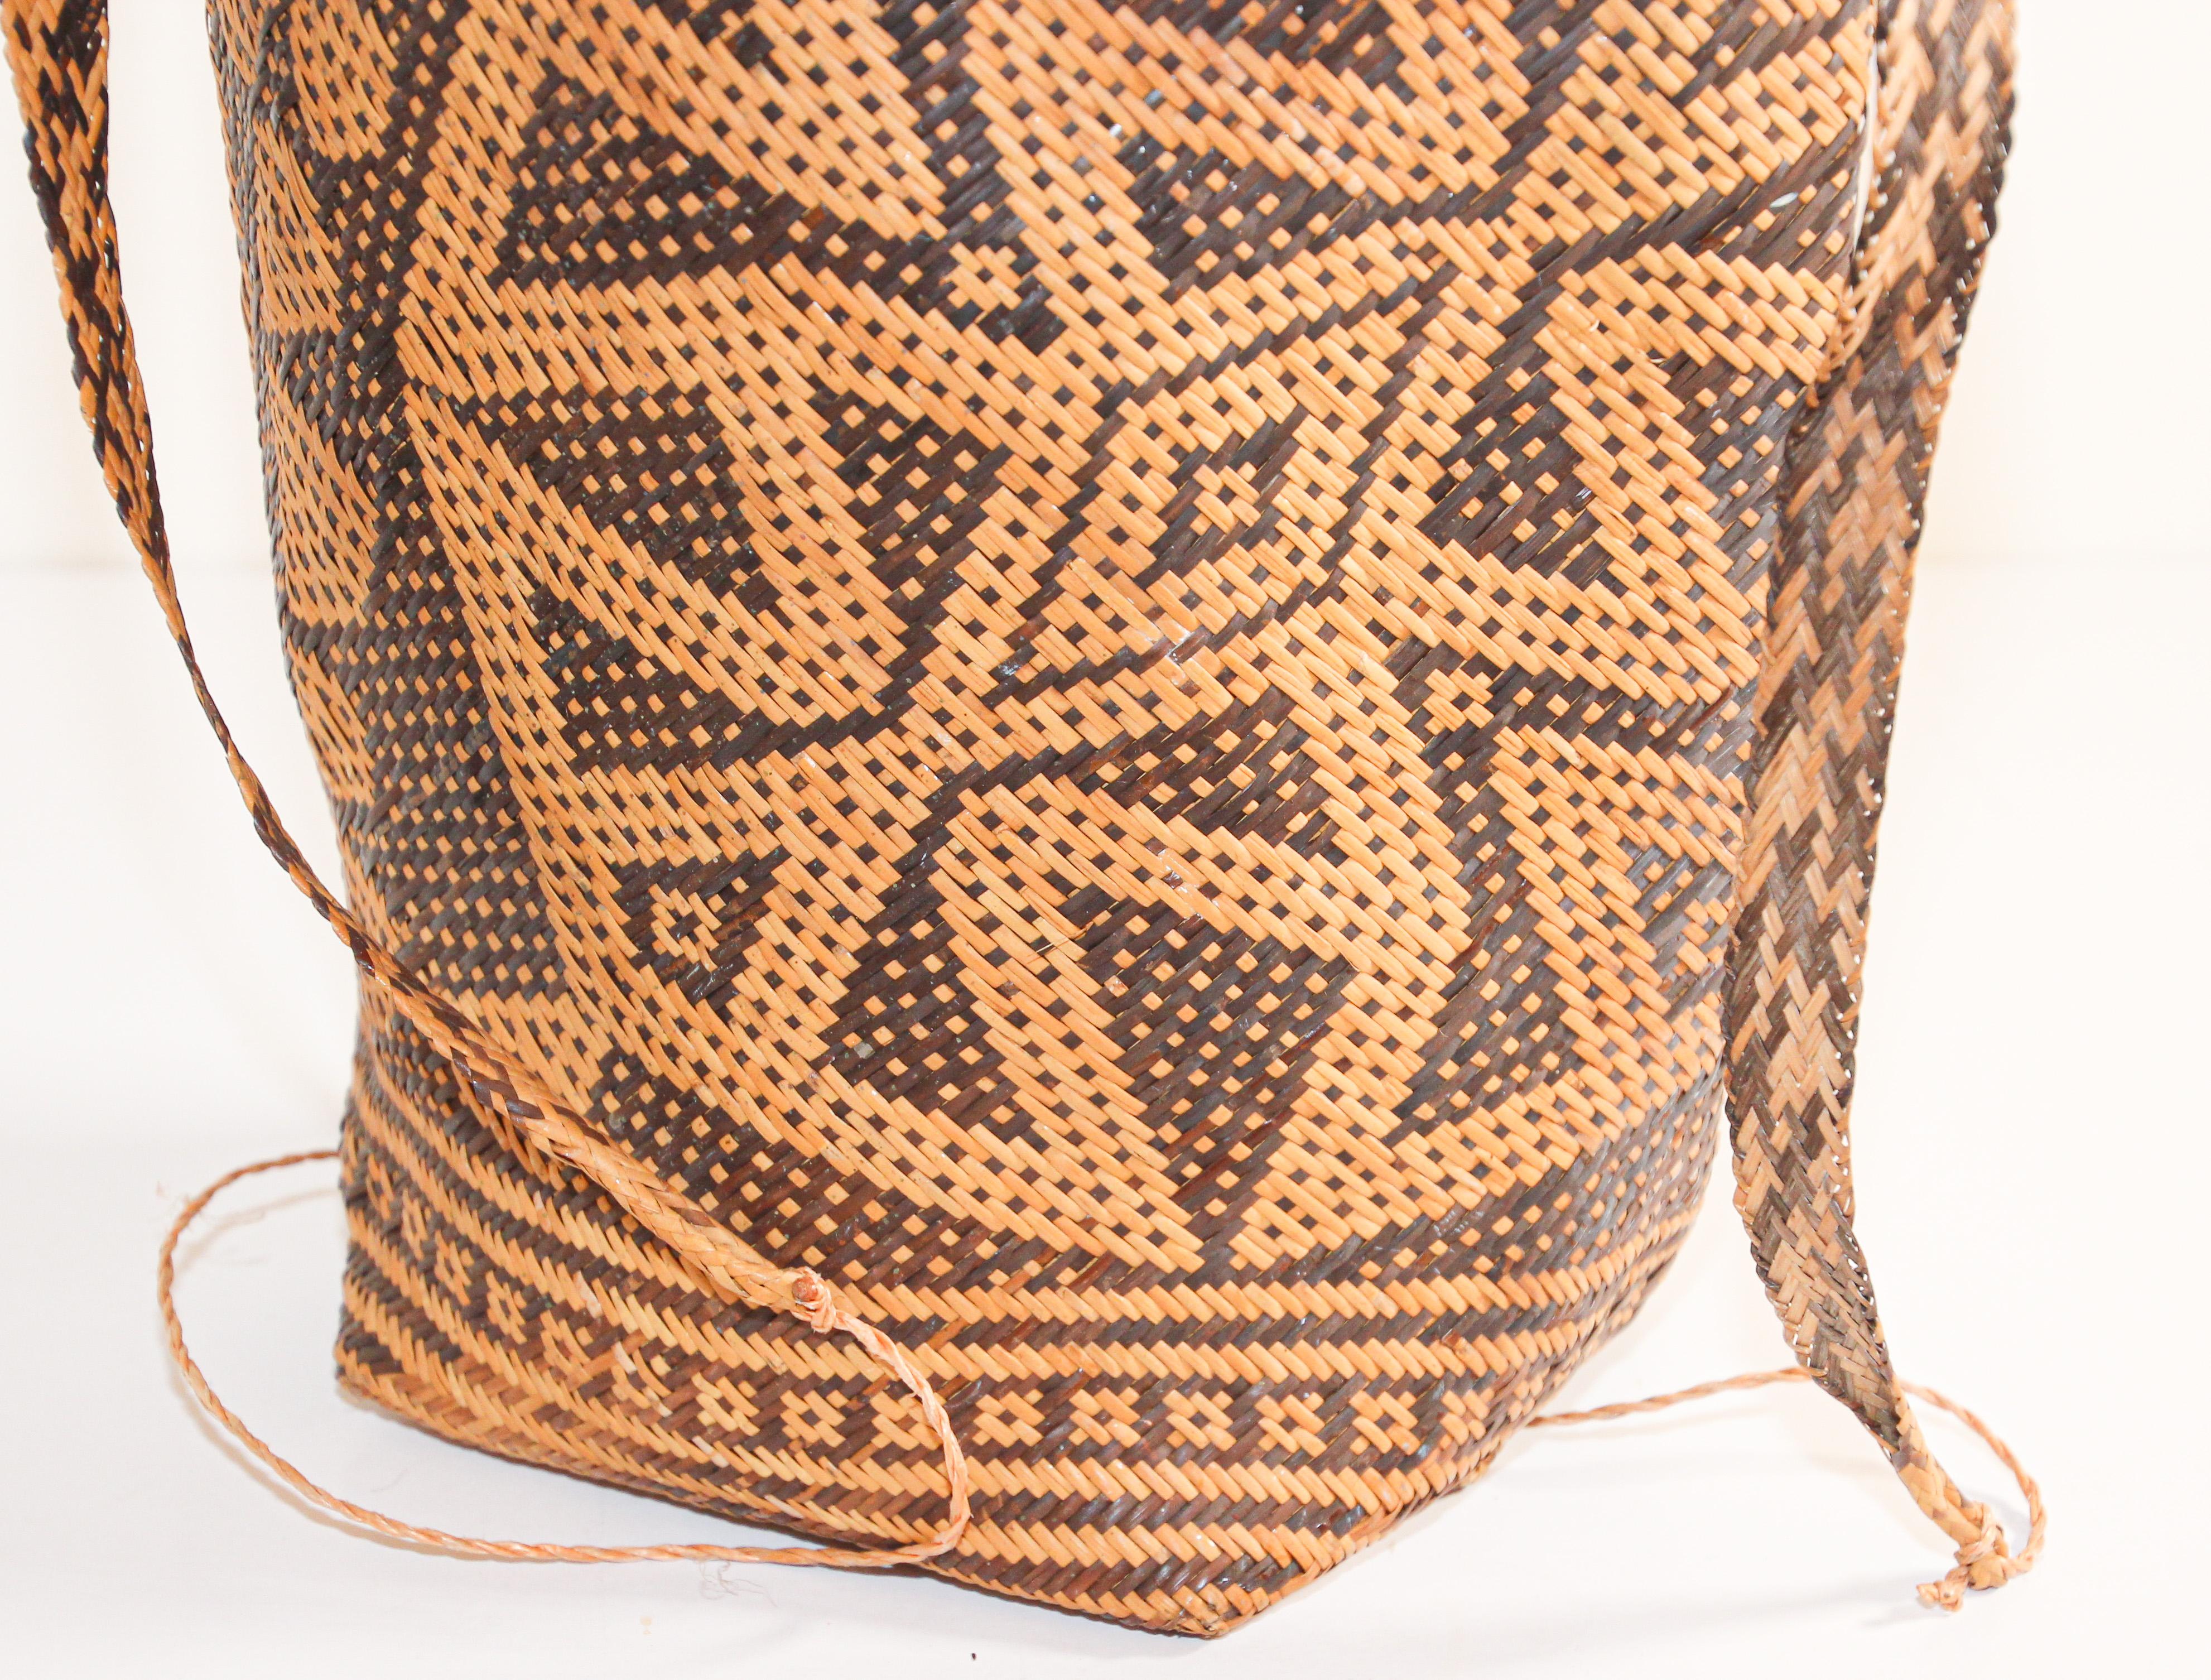 Handmade ethnic aged Borneo Ajat basket made from natural Rattan. Motifs of Burung Kenyalang / Hornbill Bird.
Traditional ethnic Borneo woven natural organic fiber rattan basket
A very rare and unusual piece of the Dayak Kayan Tribal Art